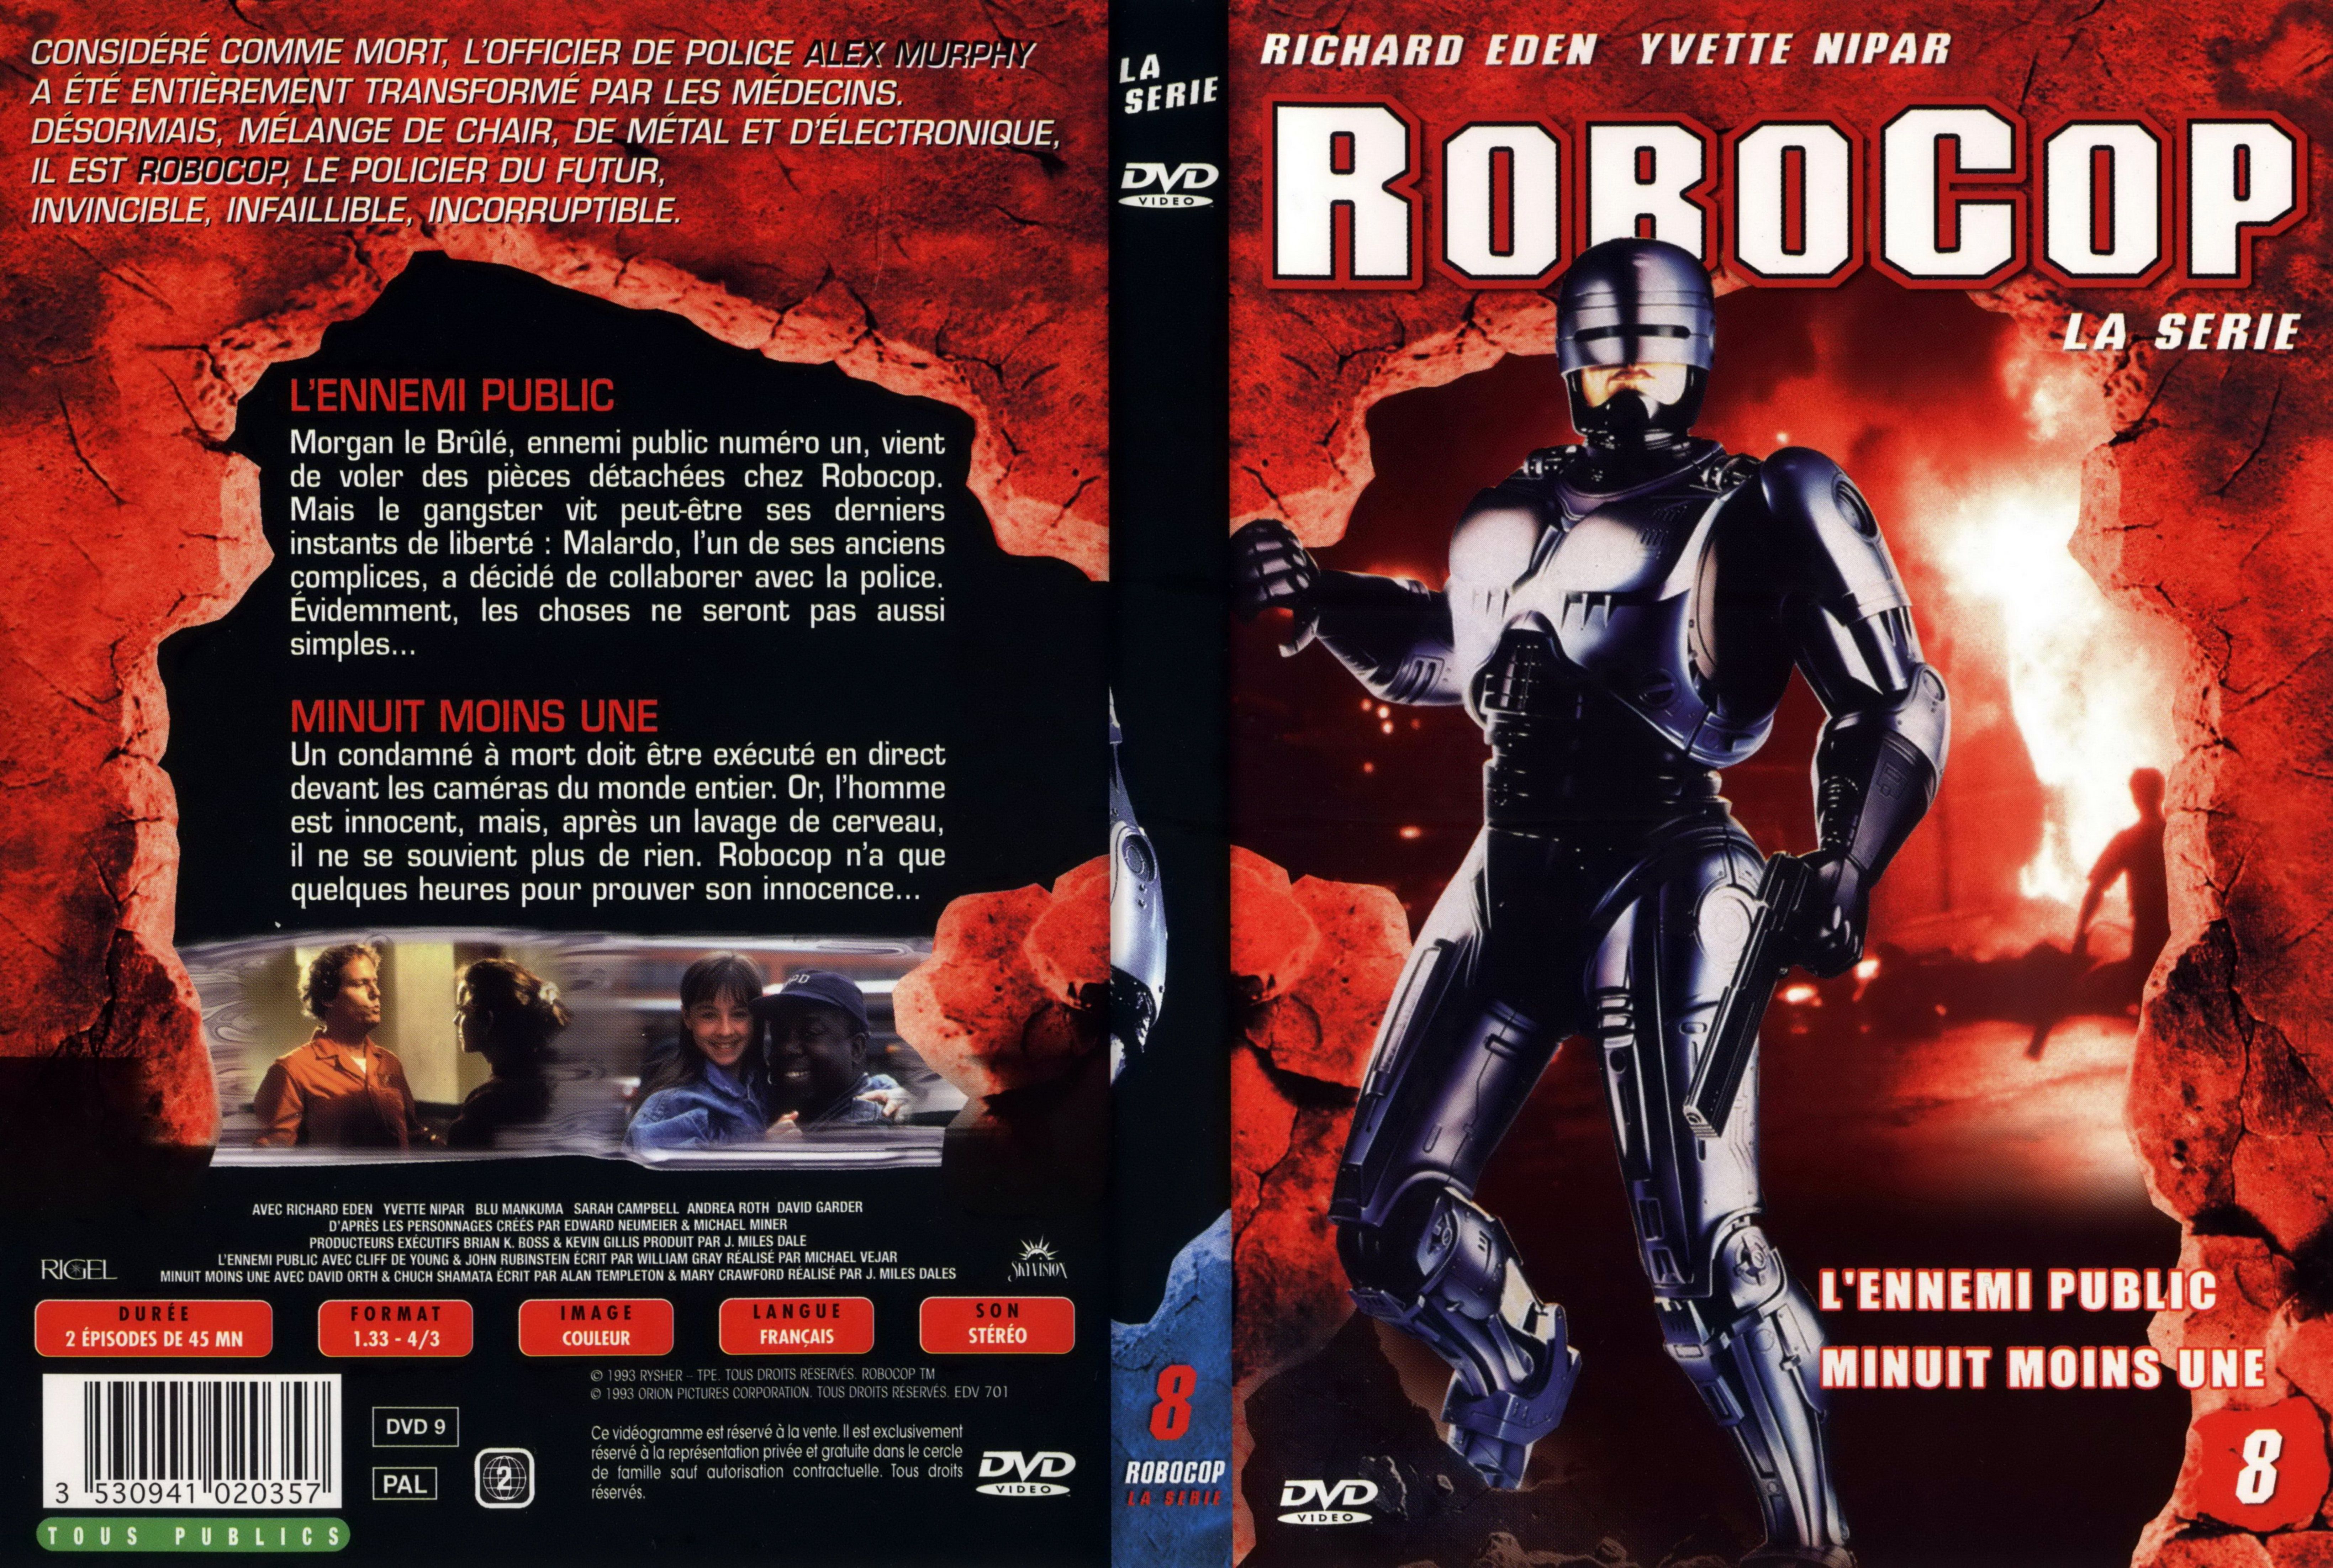 Jaquette DVD Robocop la srie vol 8